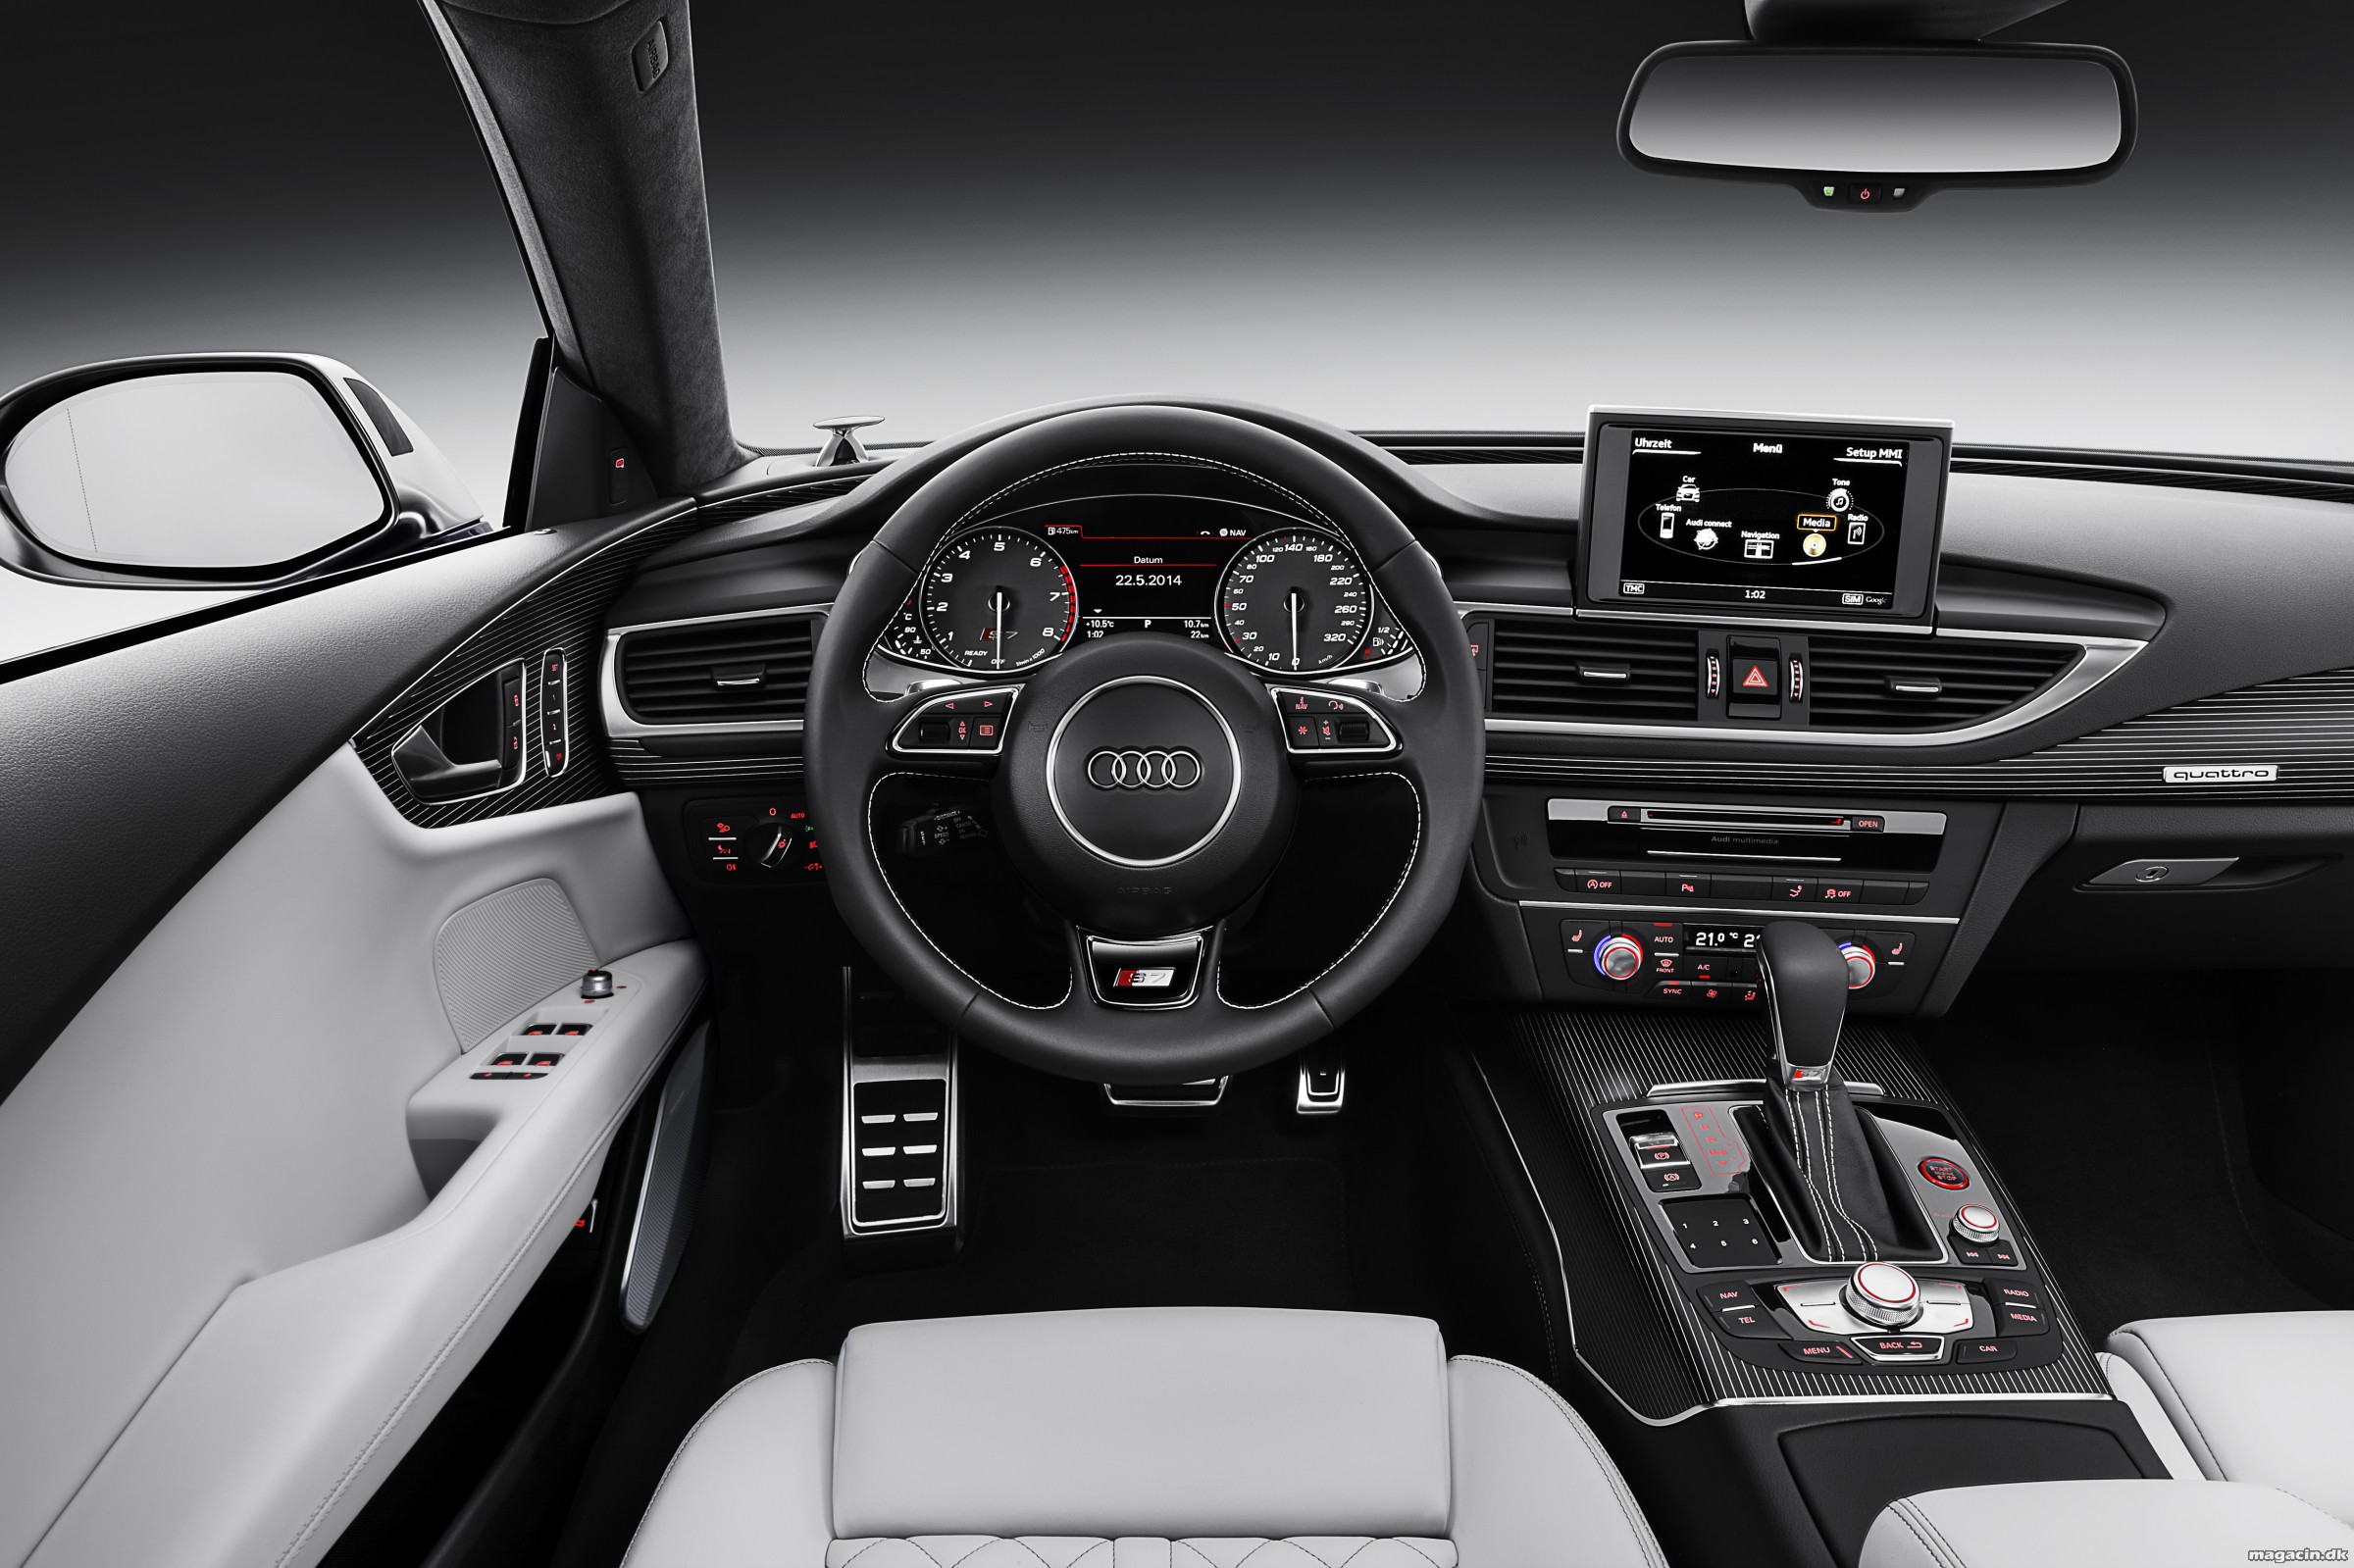 Den nye Audi A7 Sportback